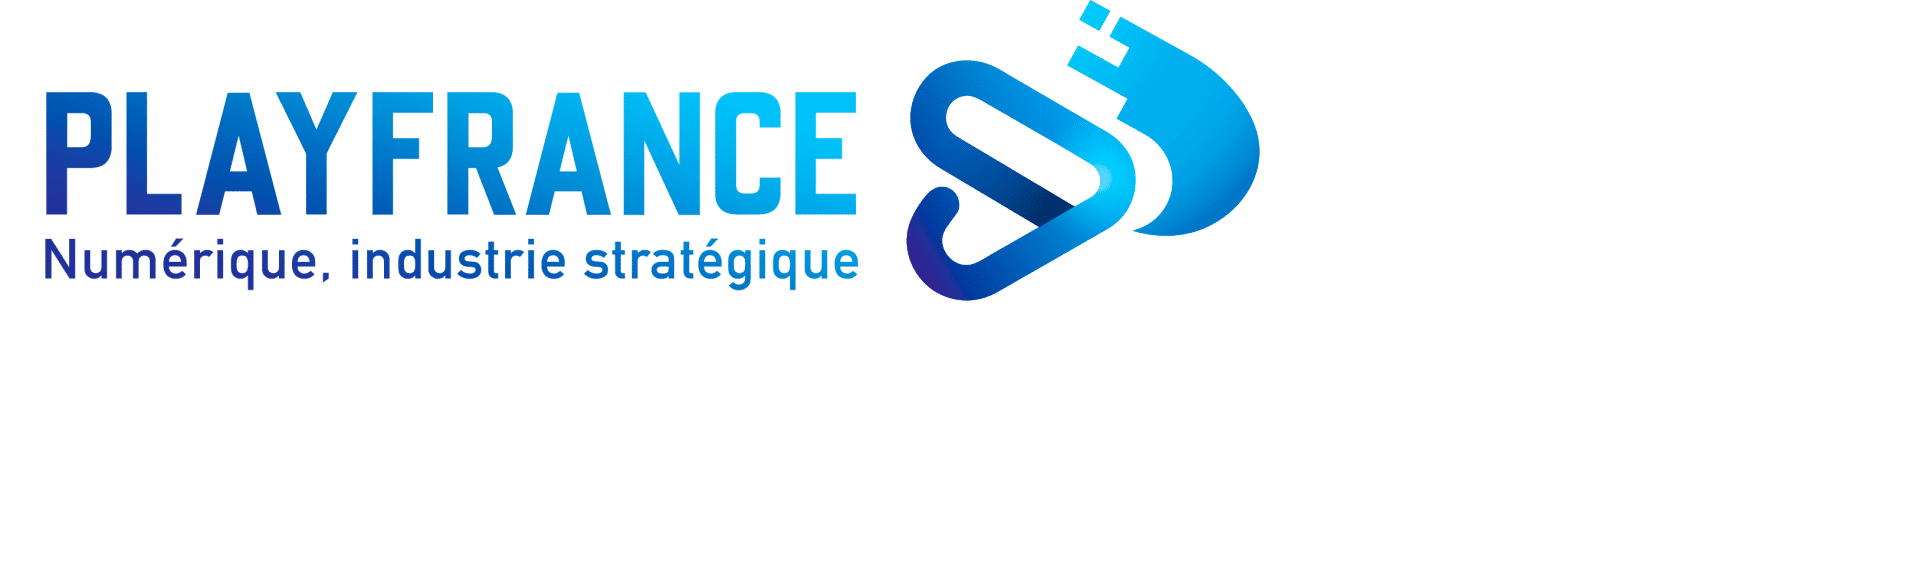 logo-playfrance